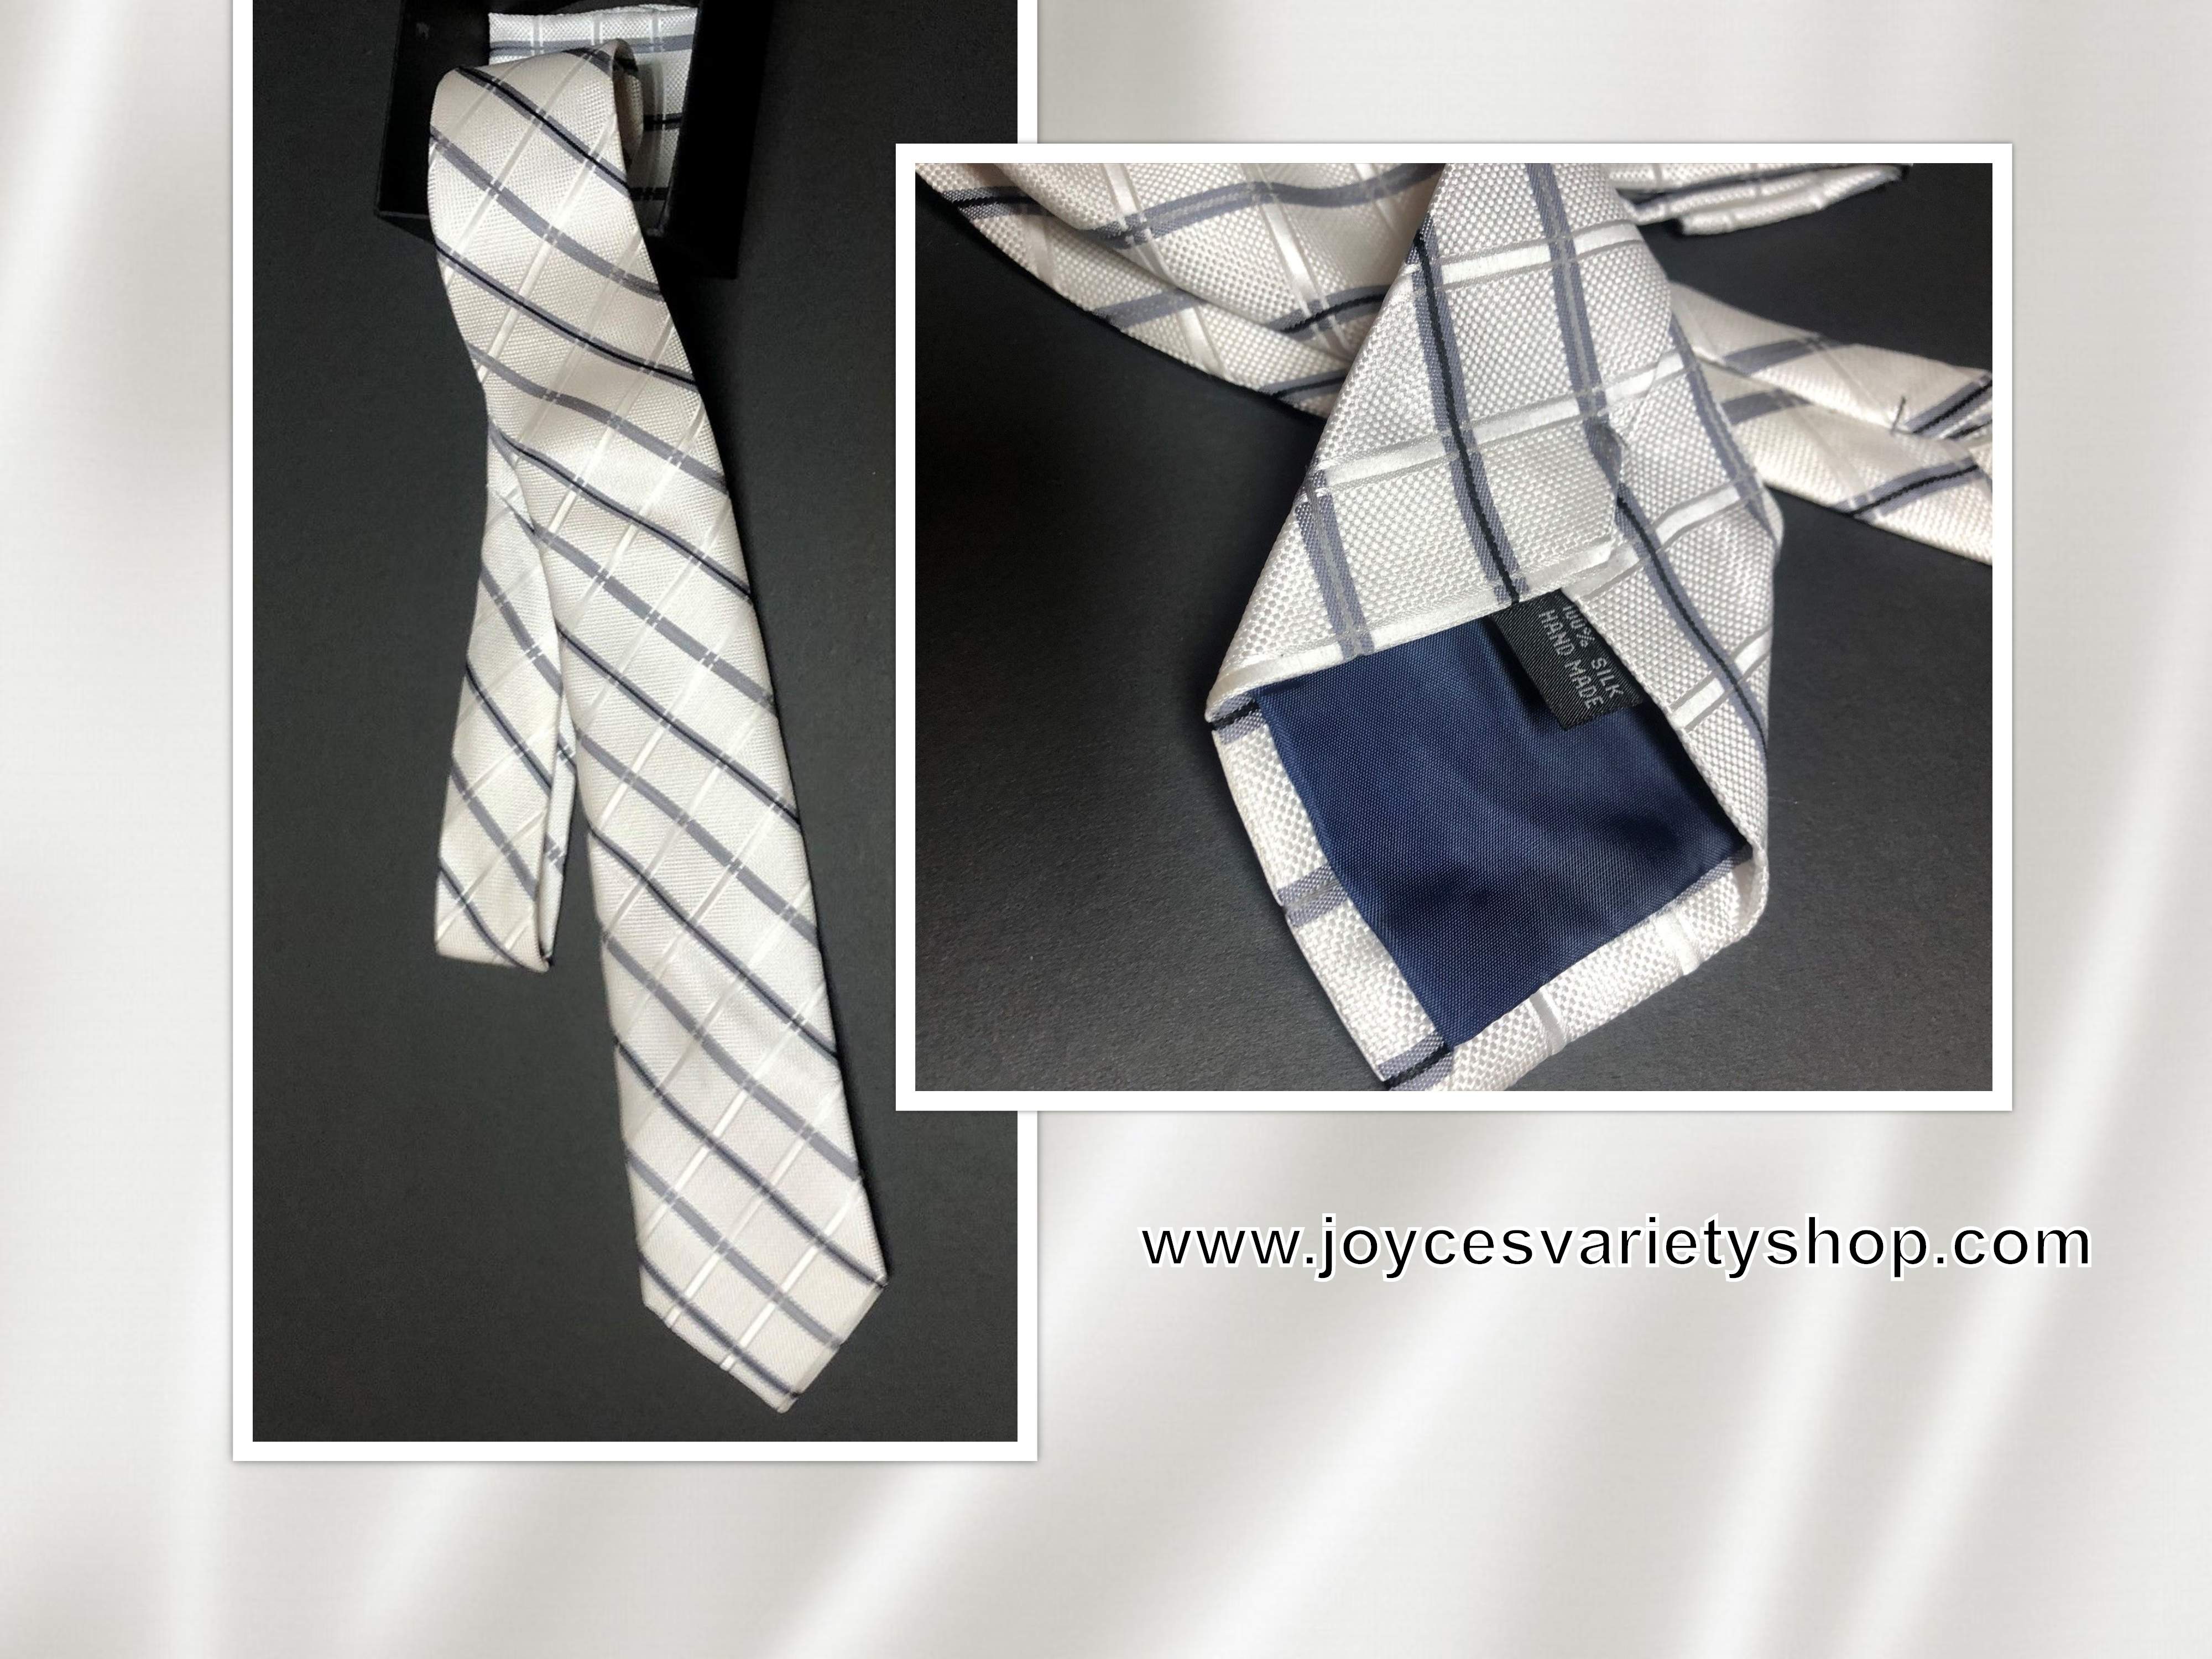 100% Silk Tie Cuff-links Pocket Square Set Black & White Striped